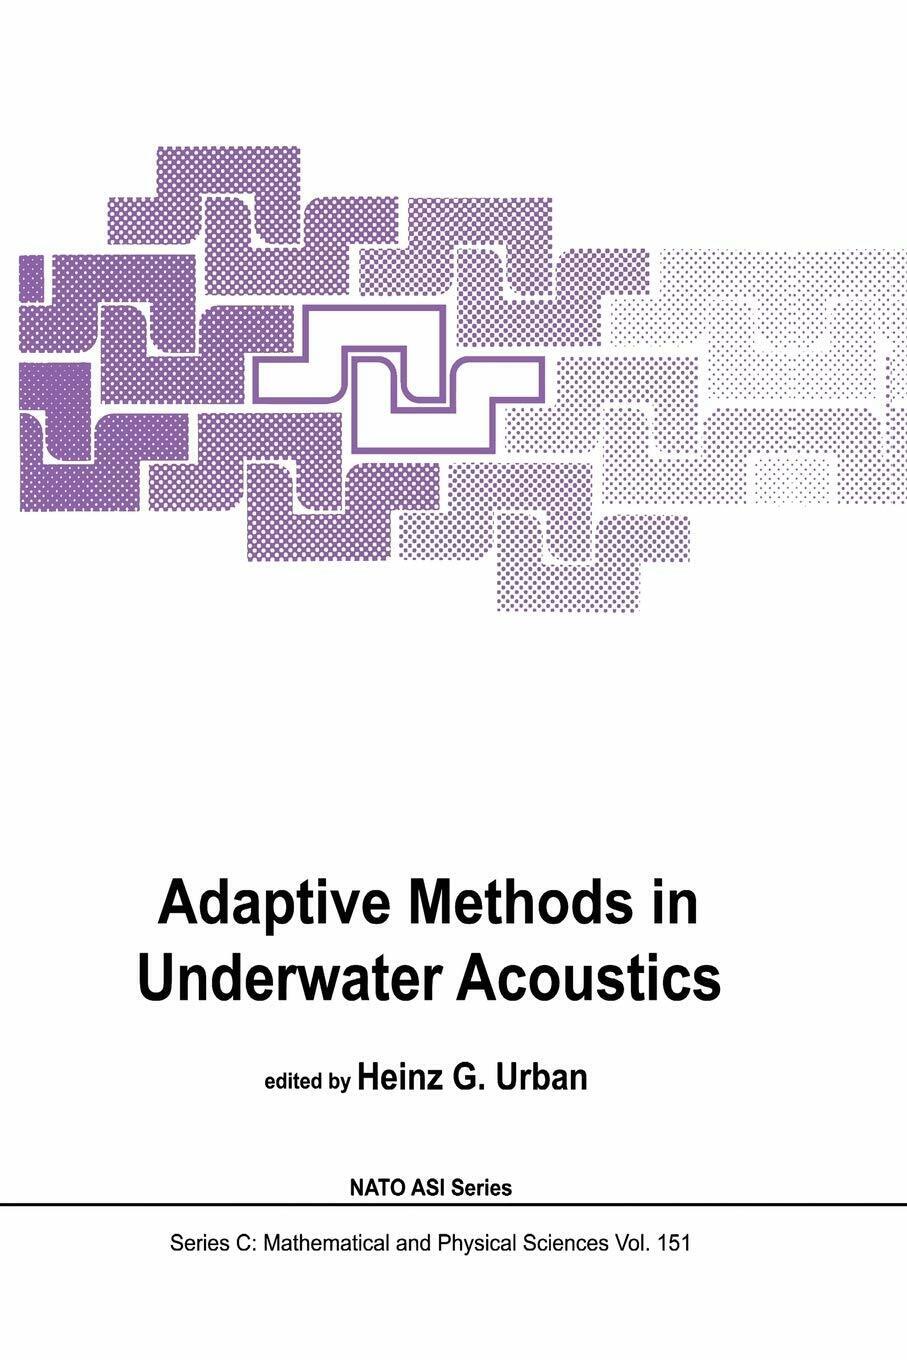 Adaptive Methods in Underwater Acoustics - H. G. Urban - Springer, 2011 